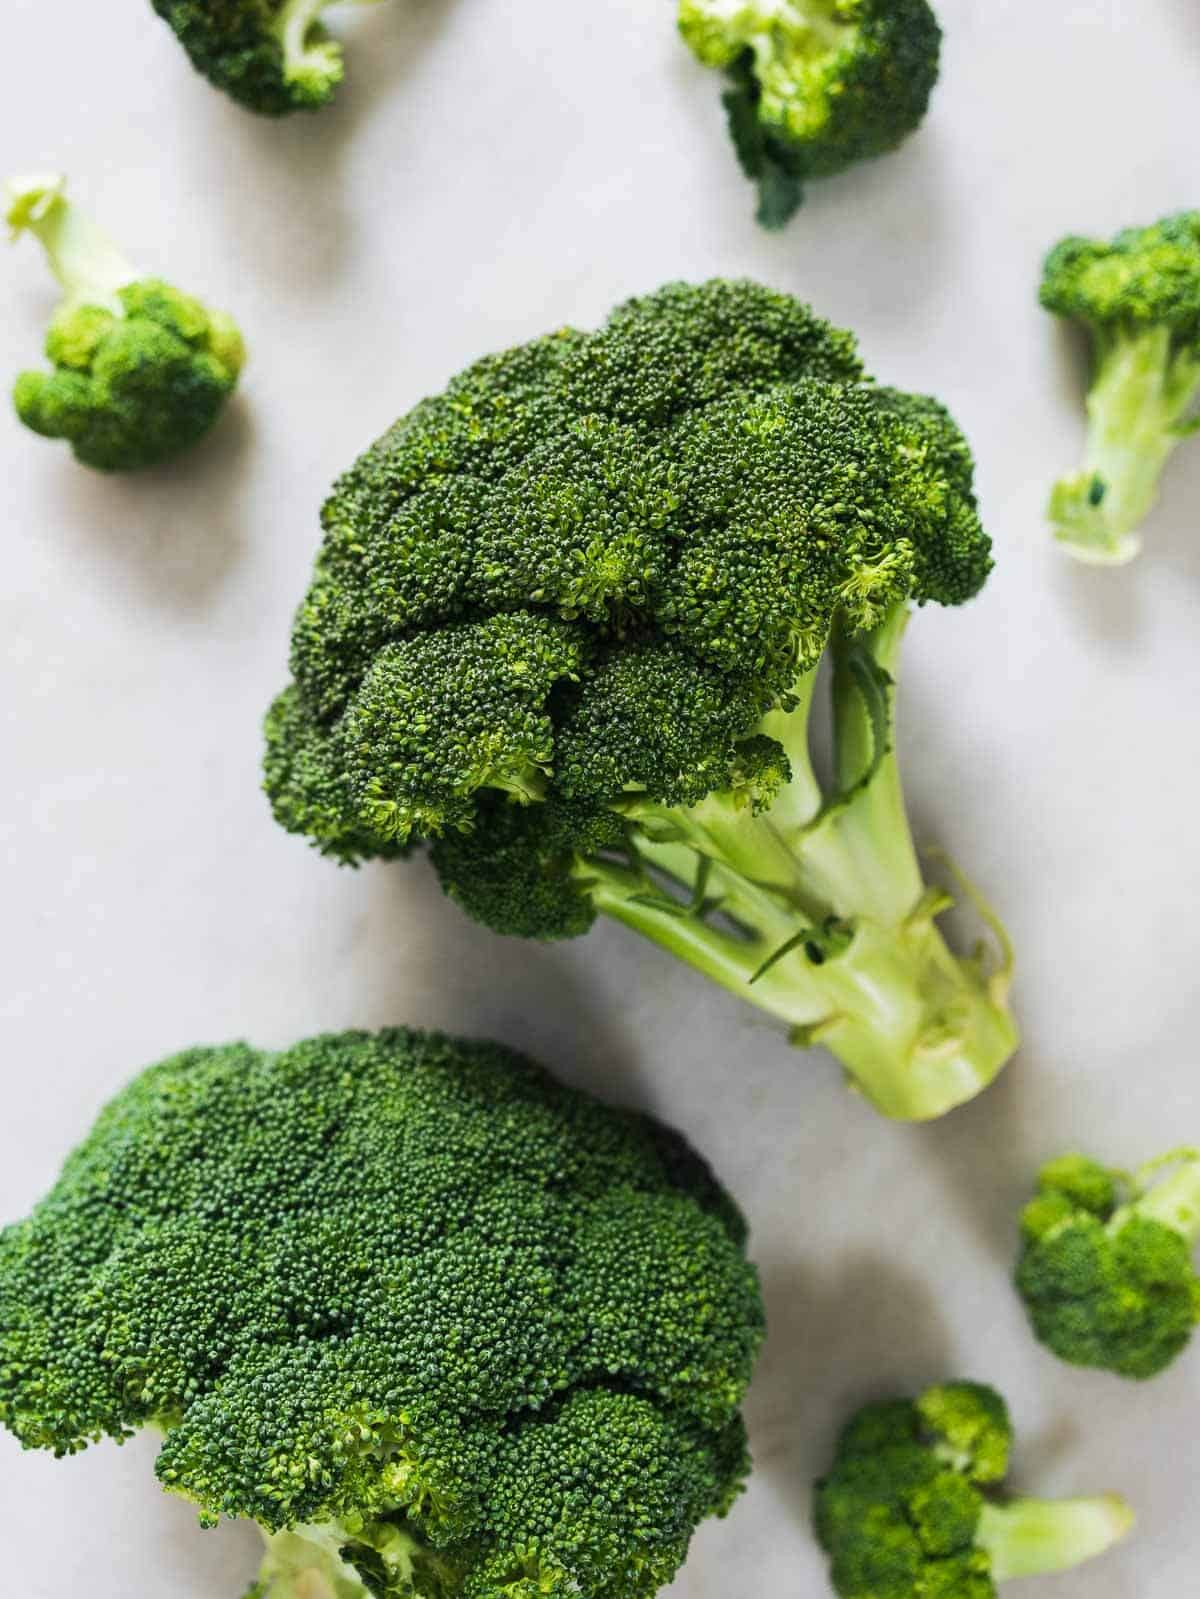 whole broccoli and florets.